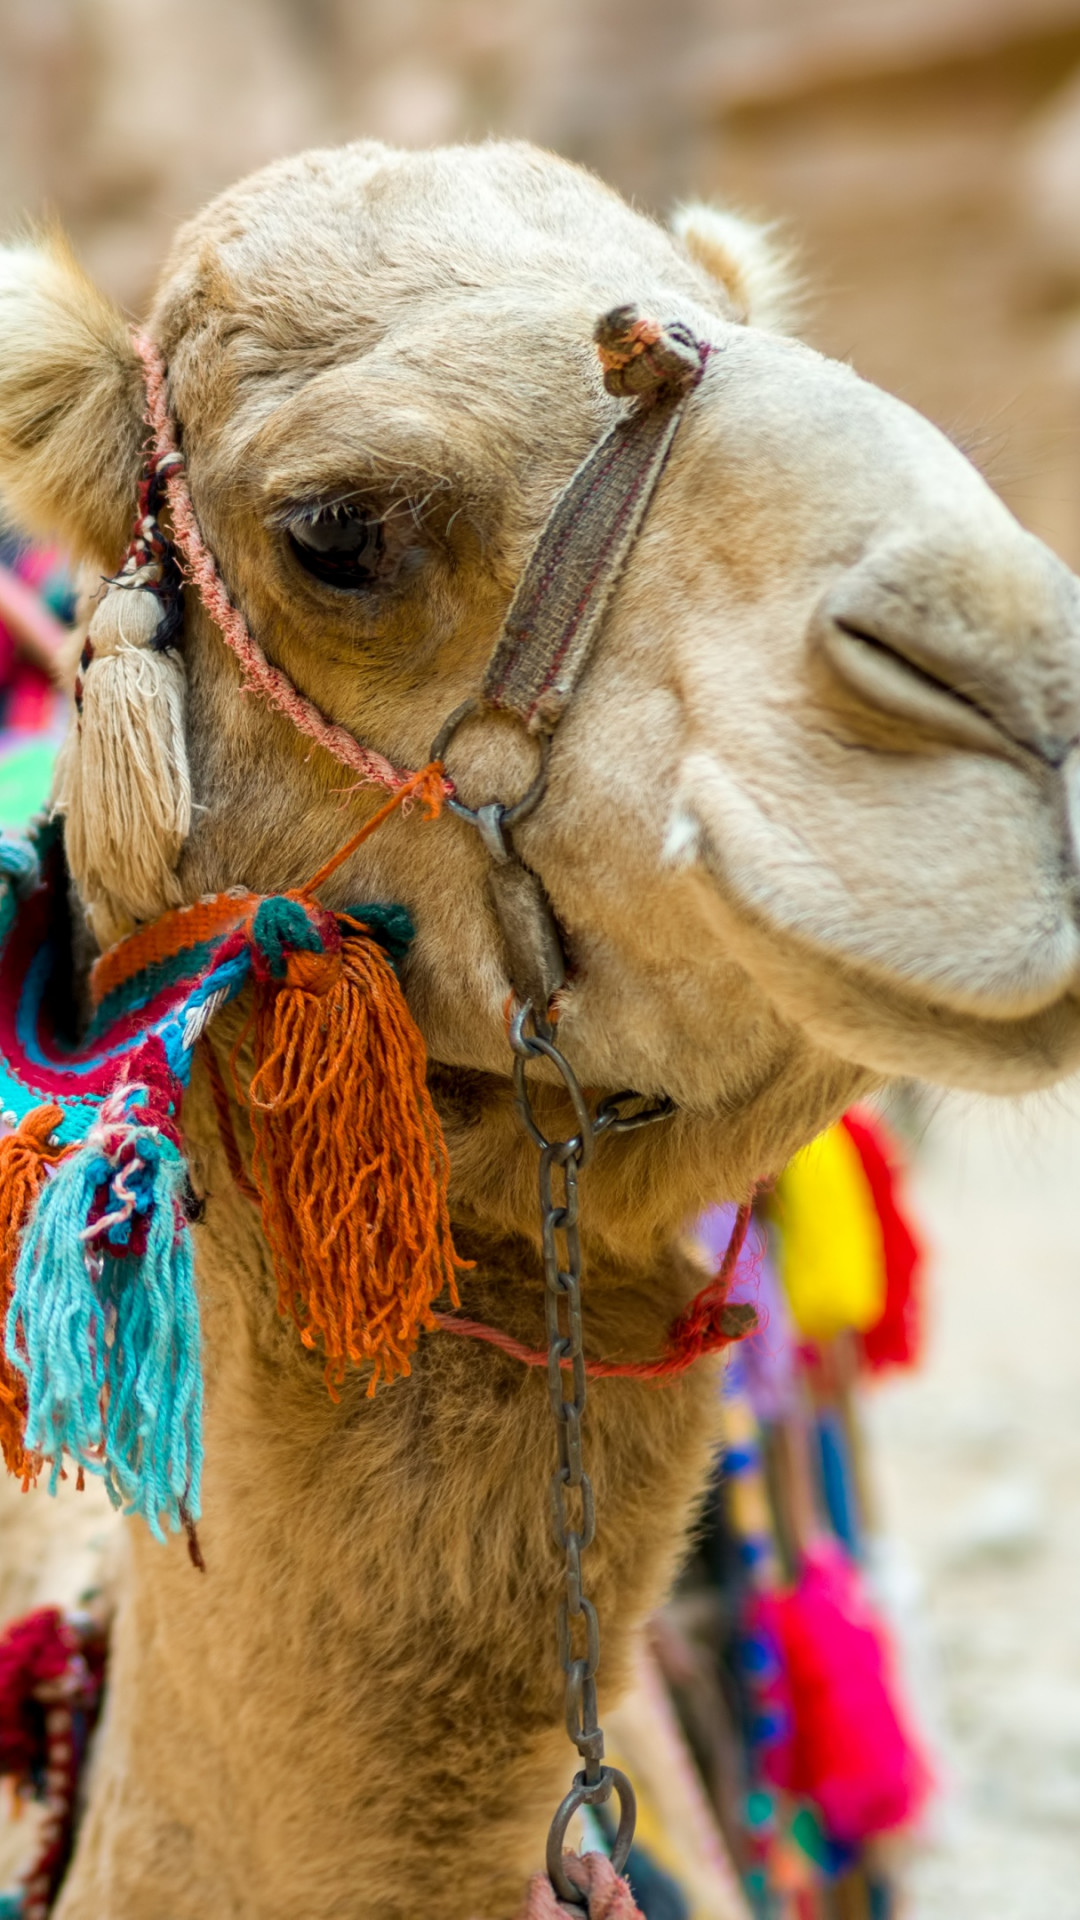 9558 Camel Wallpaper Images Stock Photos  Vectors  Shutterstock